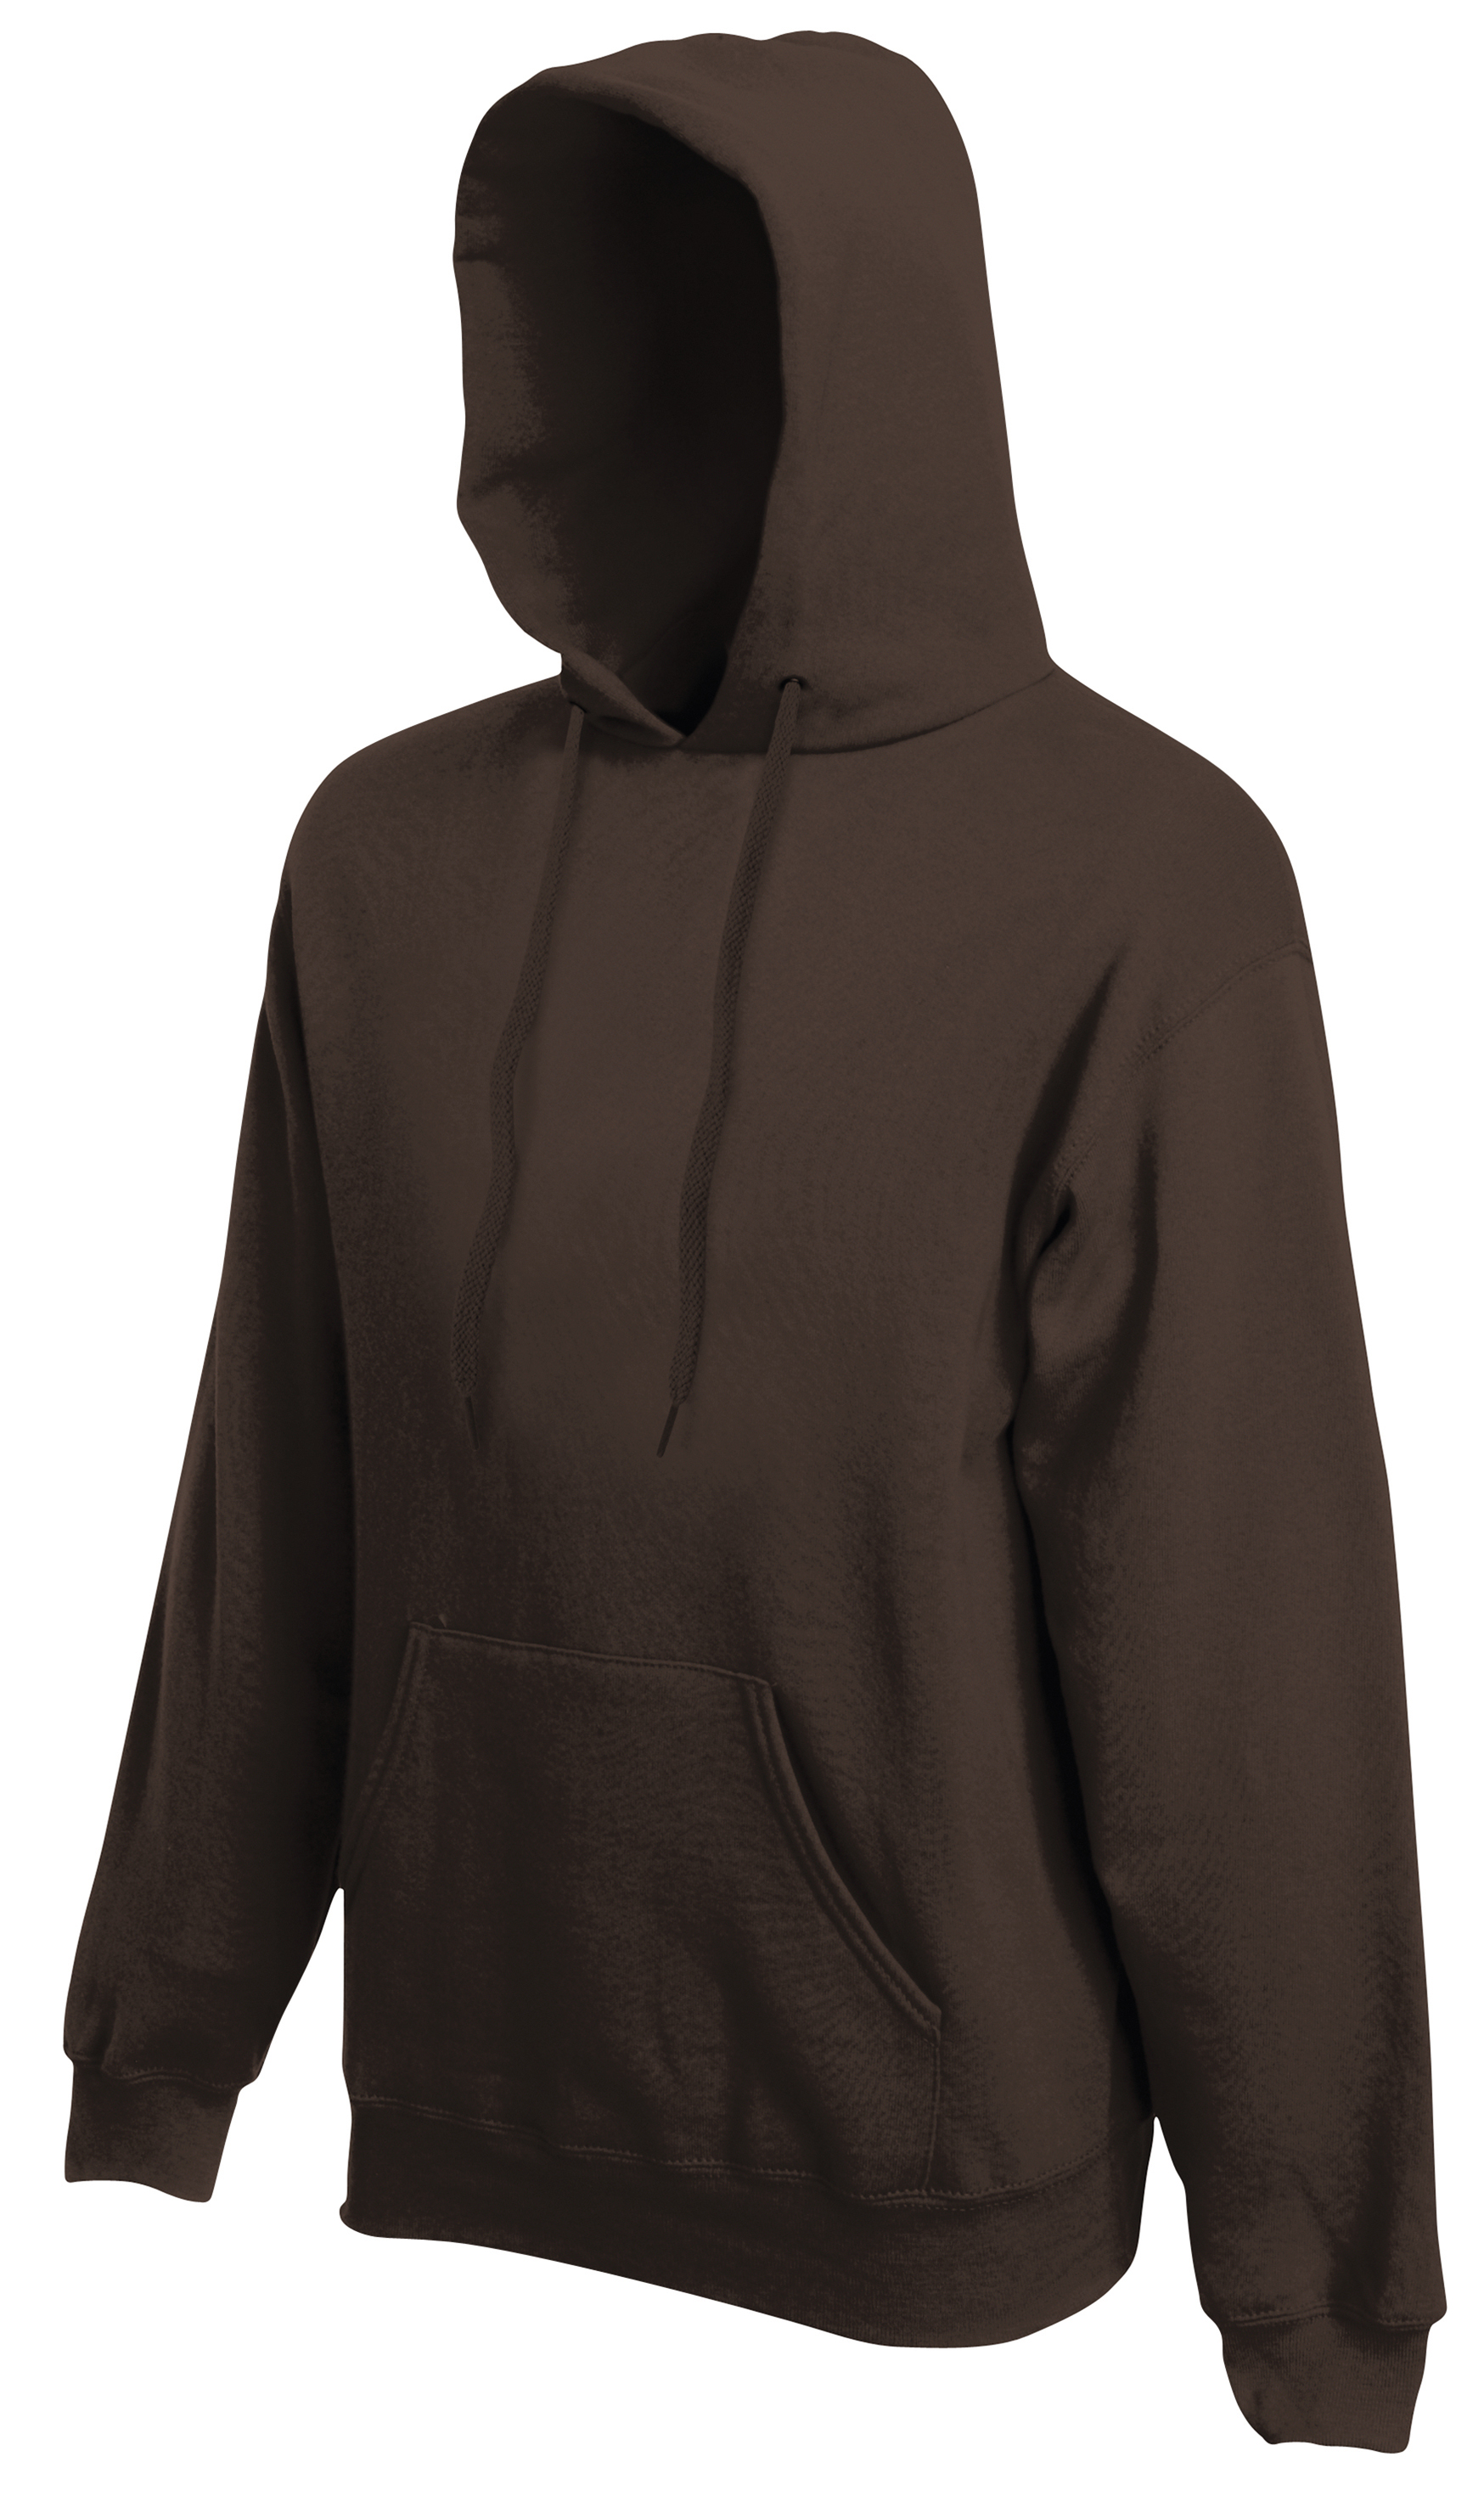 ax-httpswebsystems.s3.amazonaws.comtmp_for_downloadfruit-of-the-loom-premium-70-30-hooded-sweatshirt-chocolate.jpeg